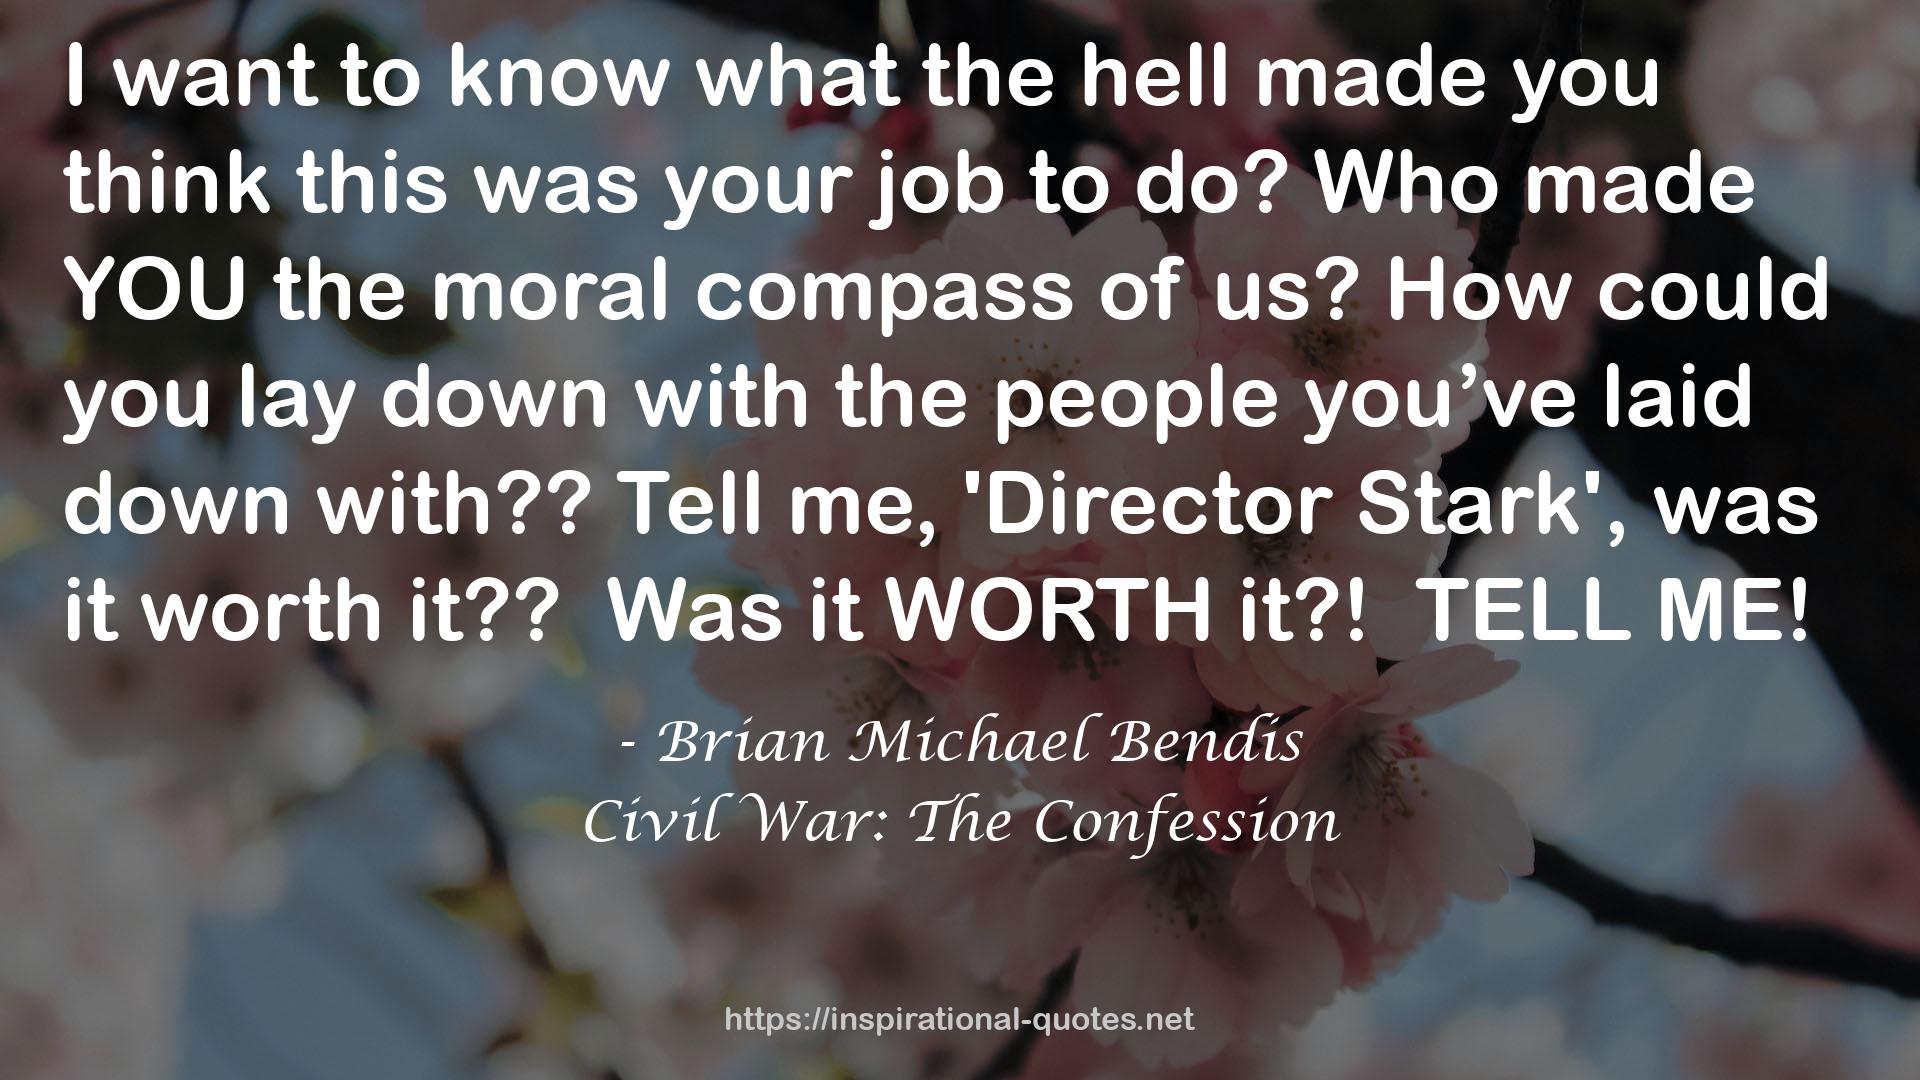 Civil War: The Confession QUOTES